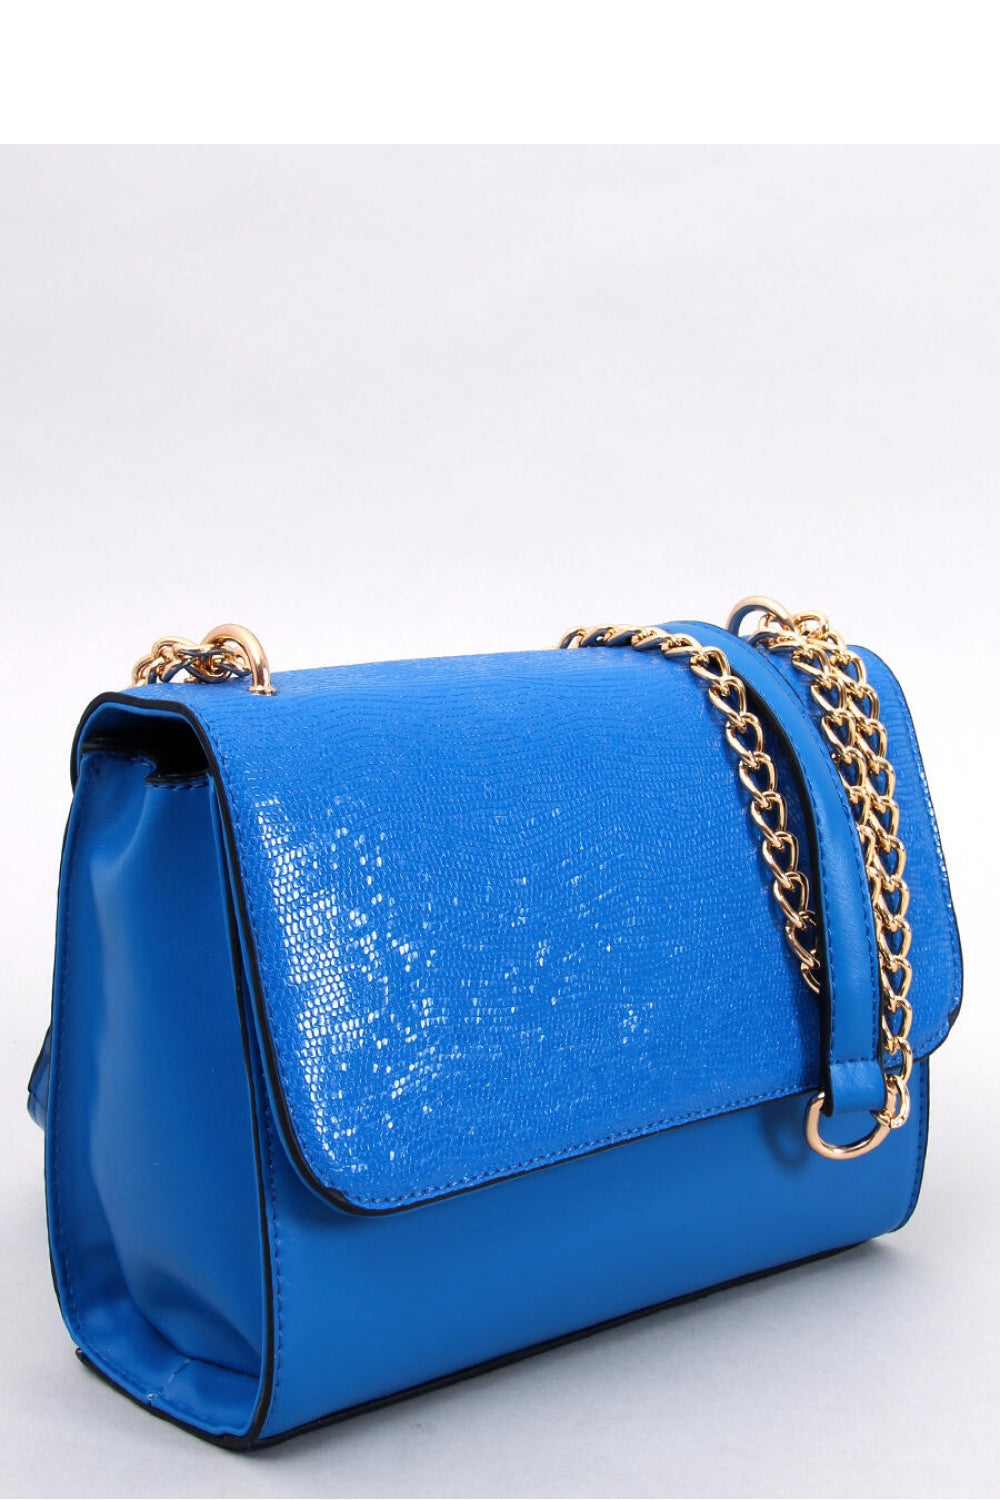 Messenger bag model 180354 Elsy Style Casual Handbags, Shoulder Bags